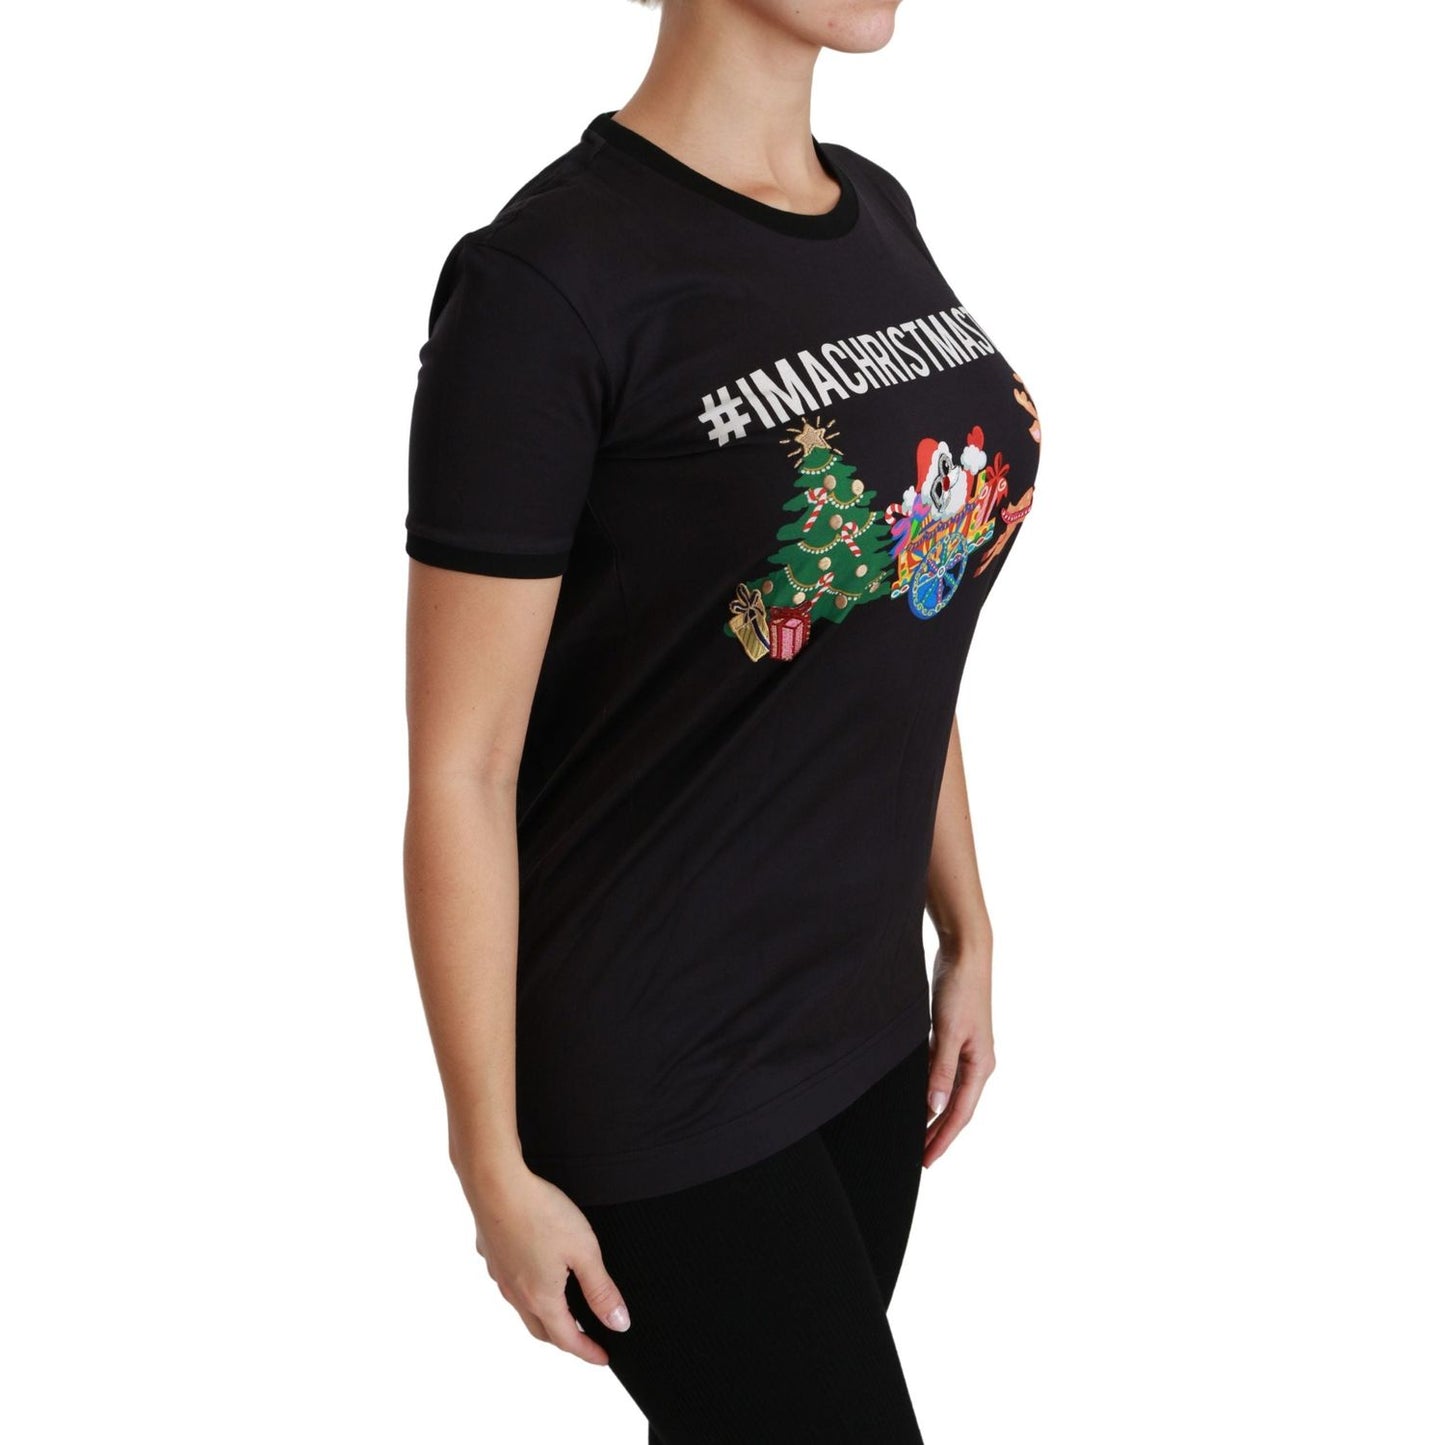 Dolce & Gabbana | Black #ImAChristmasTree Crewneck Top T-shirt | McRichard Designer Brands